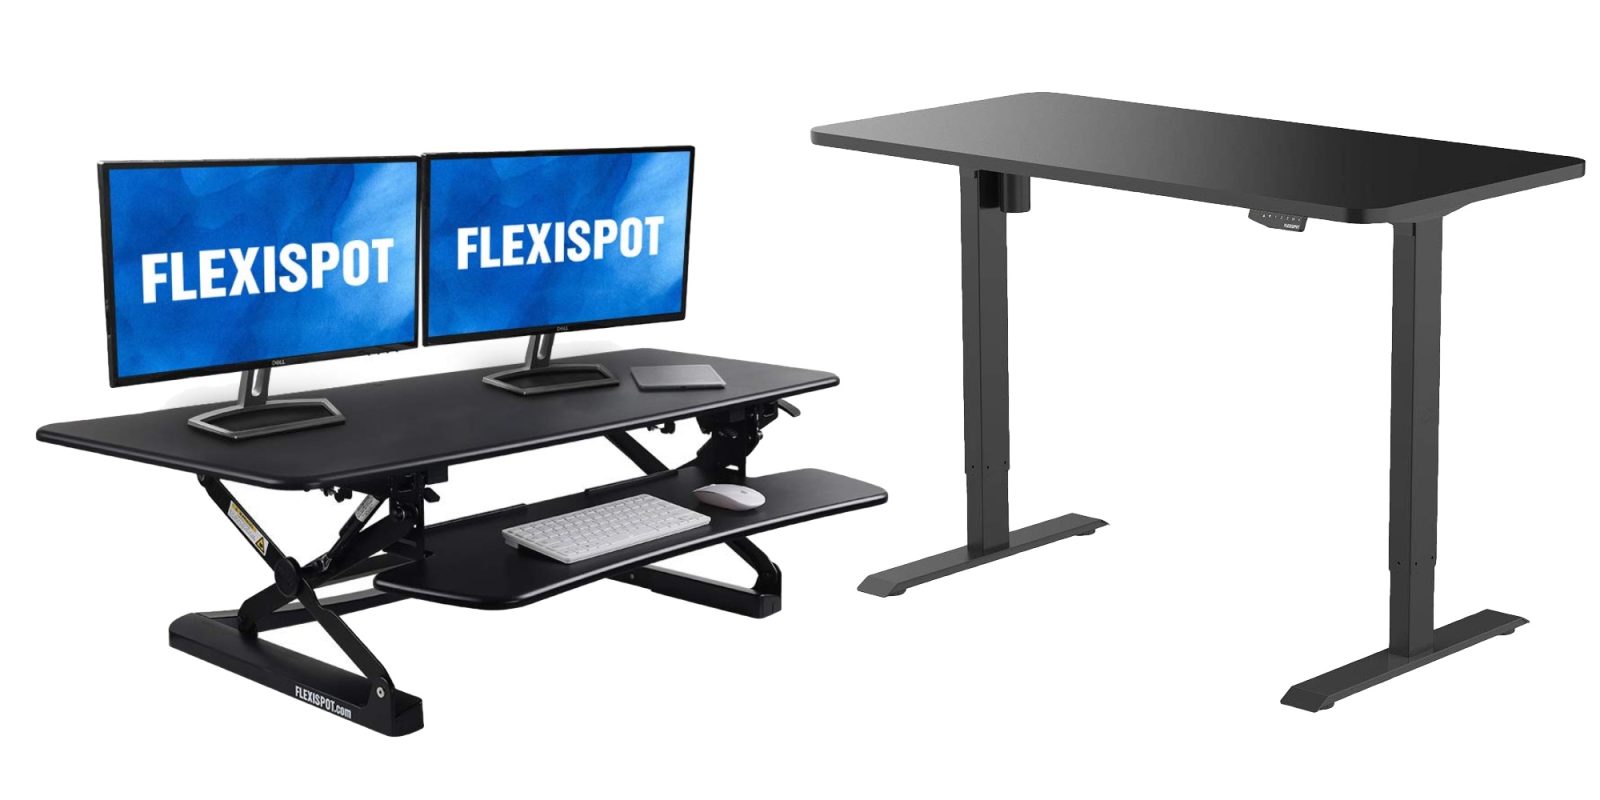 Flexispot standing desk price